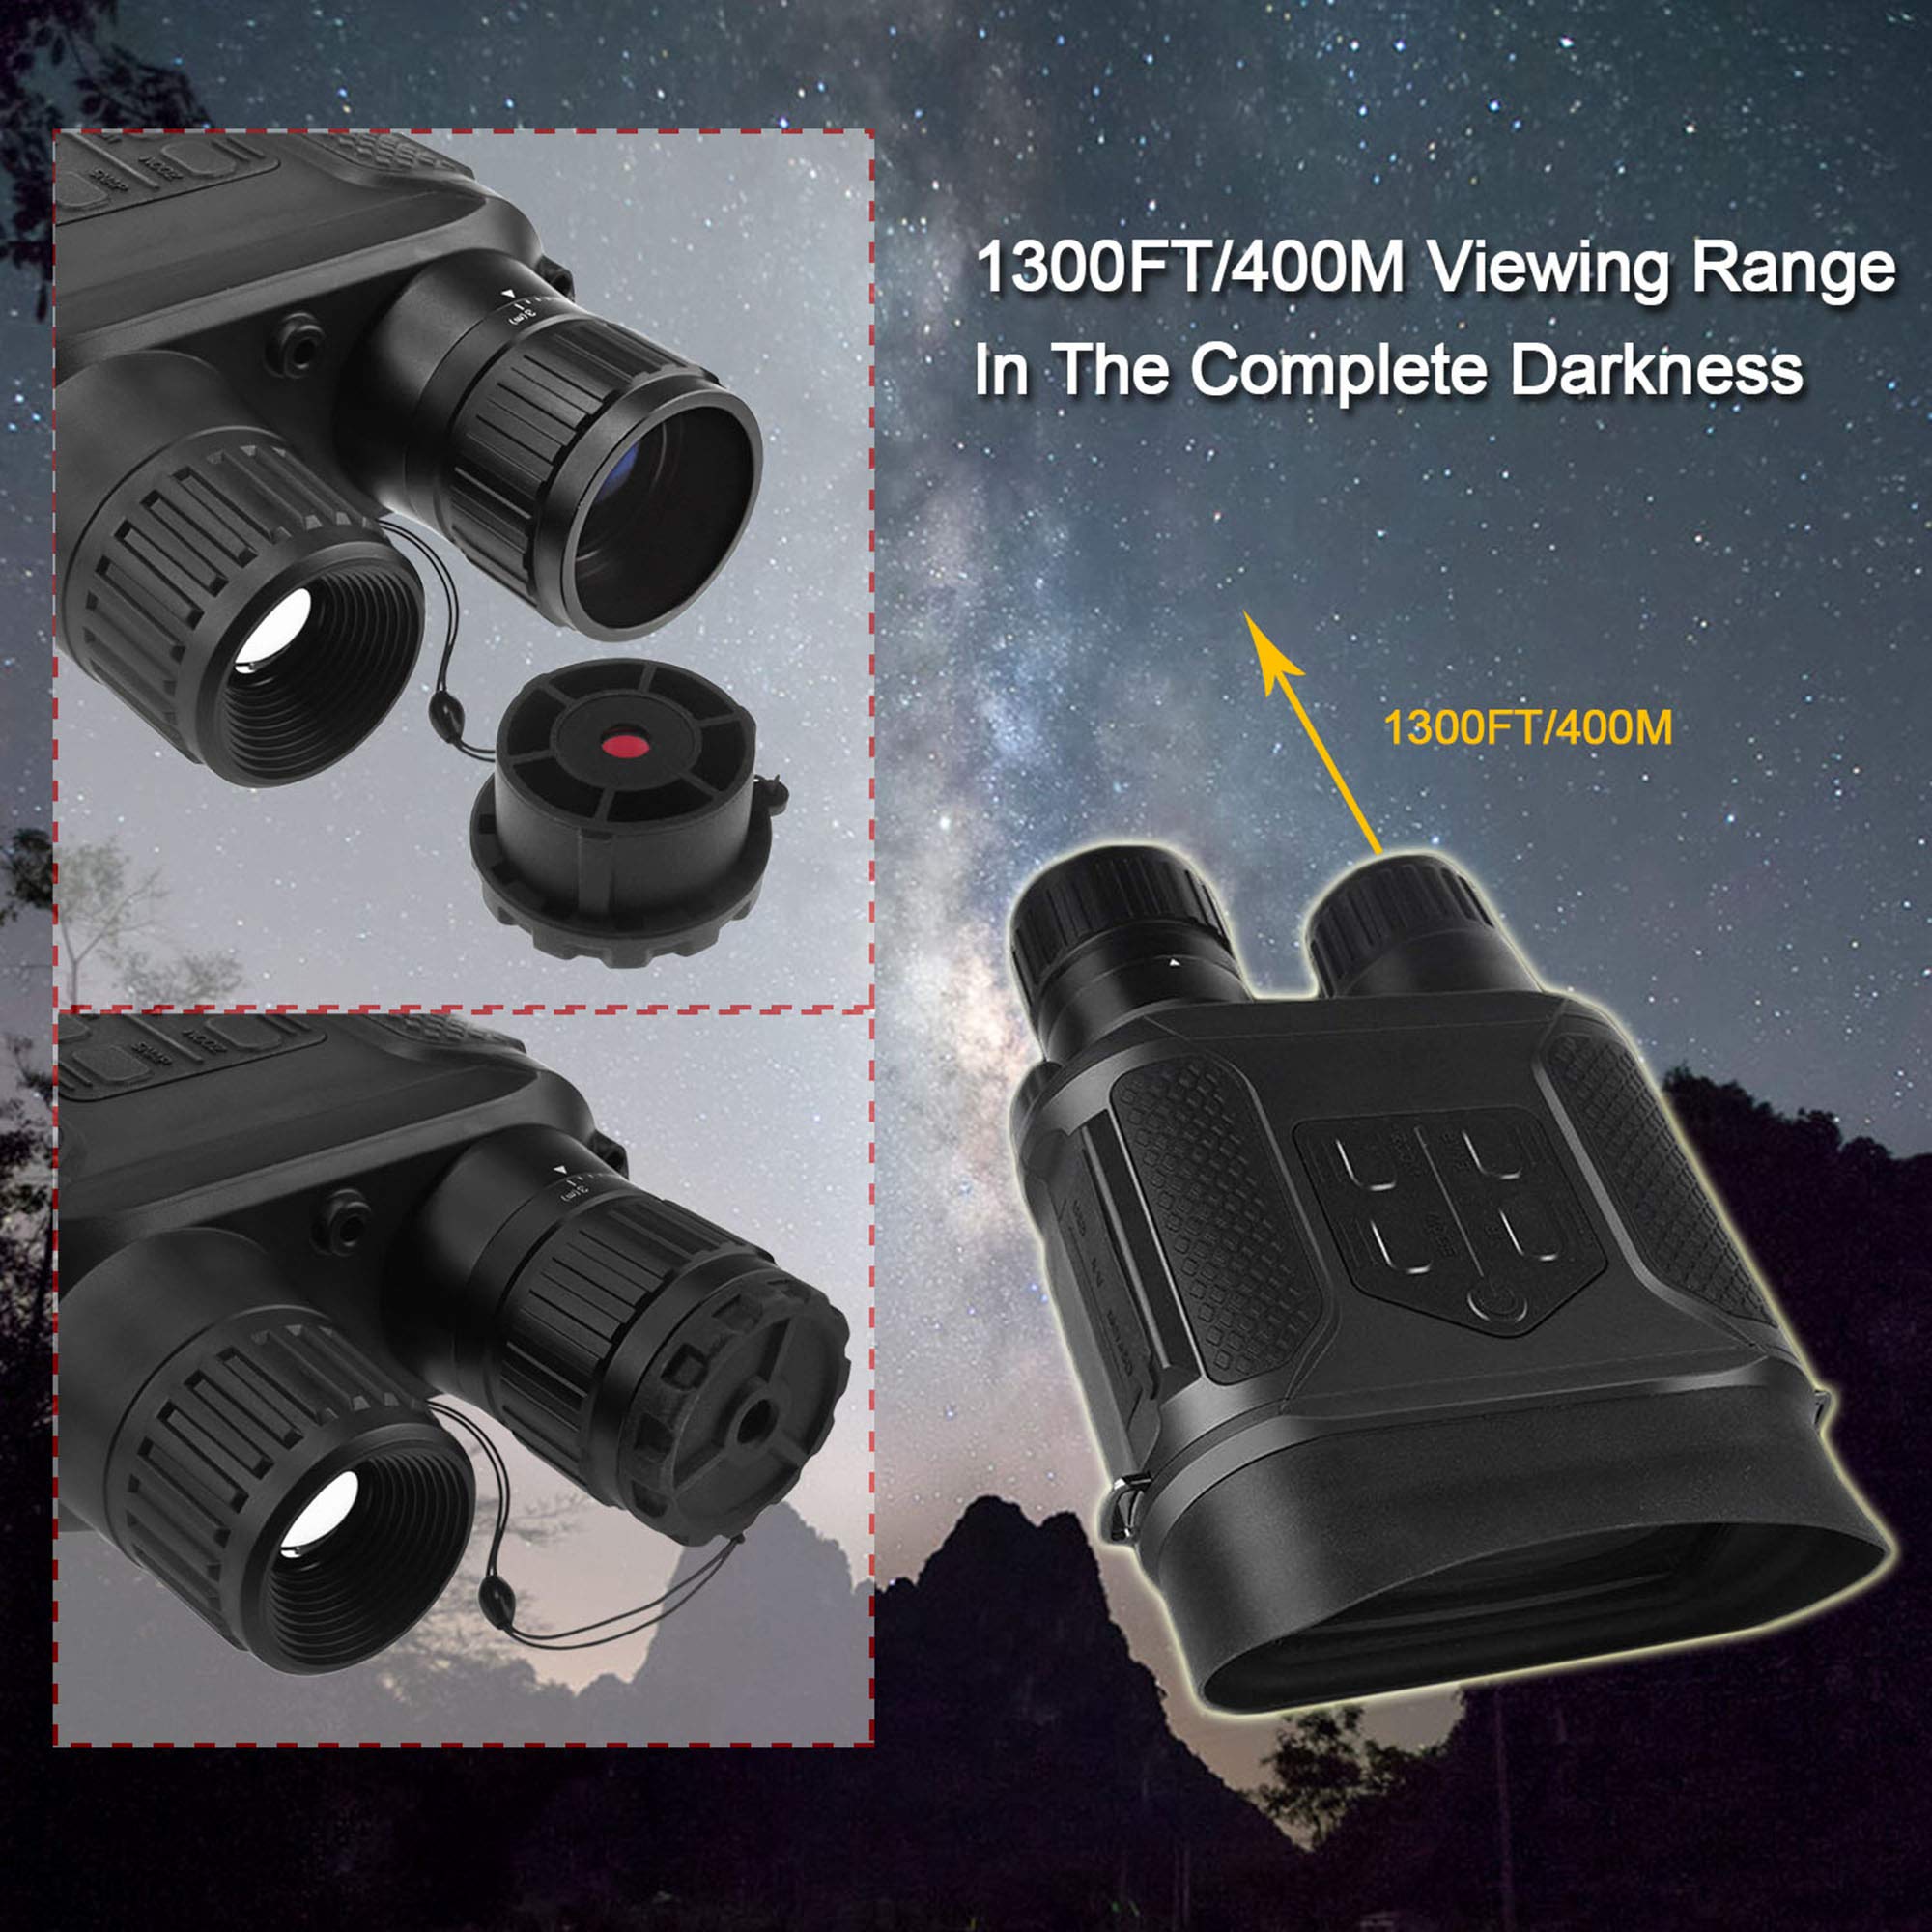 Alstar Night Vision Binocular/Digital Infrared Night Vision Scope - 7x31 Hunting IR Telescope with 2